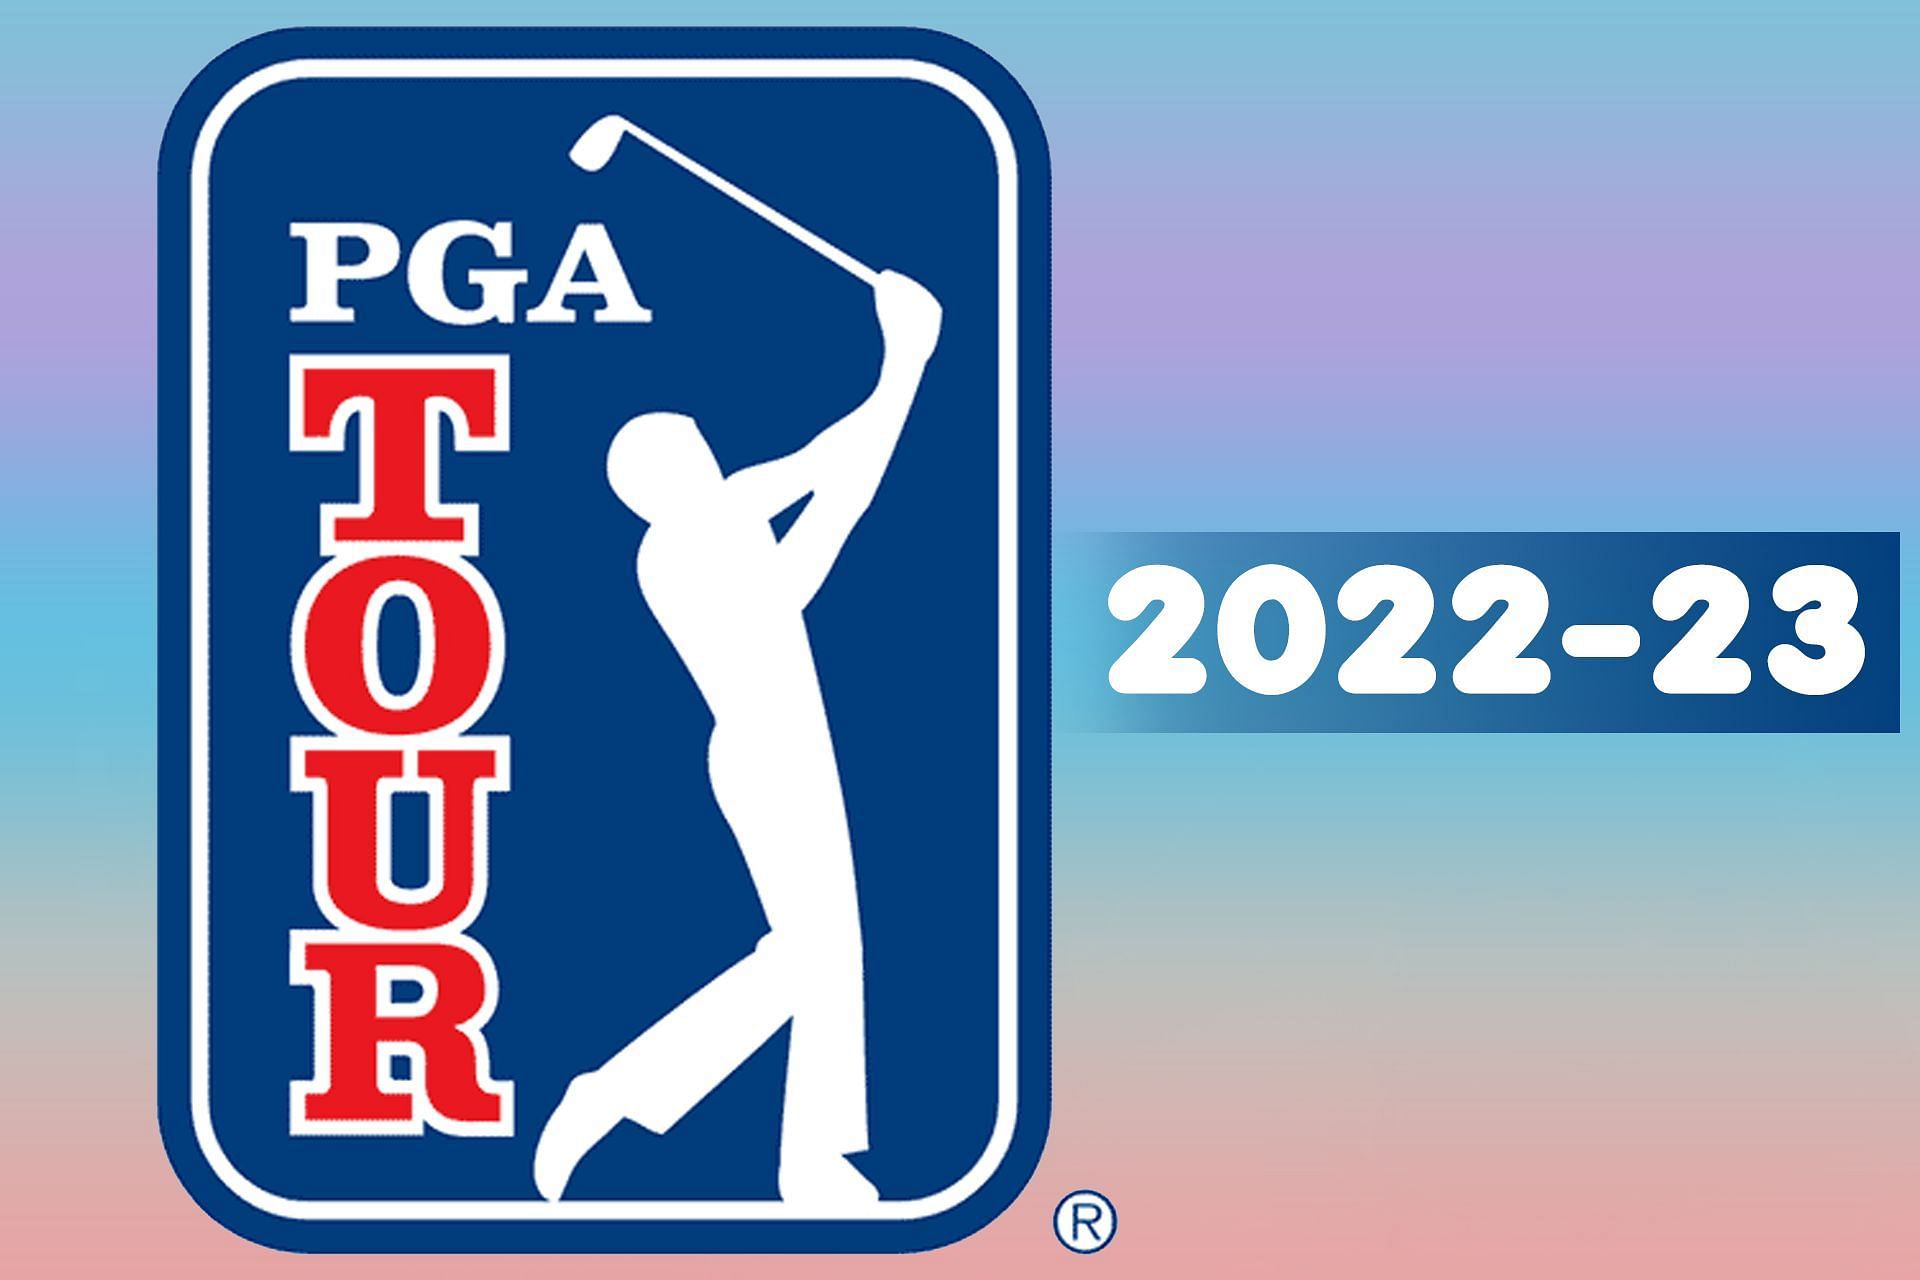 pga tour money standings 2022